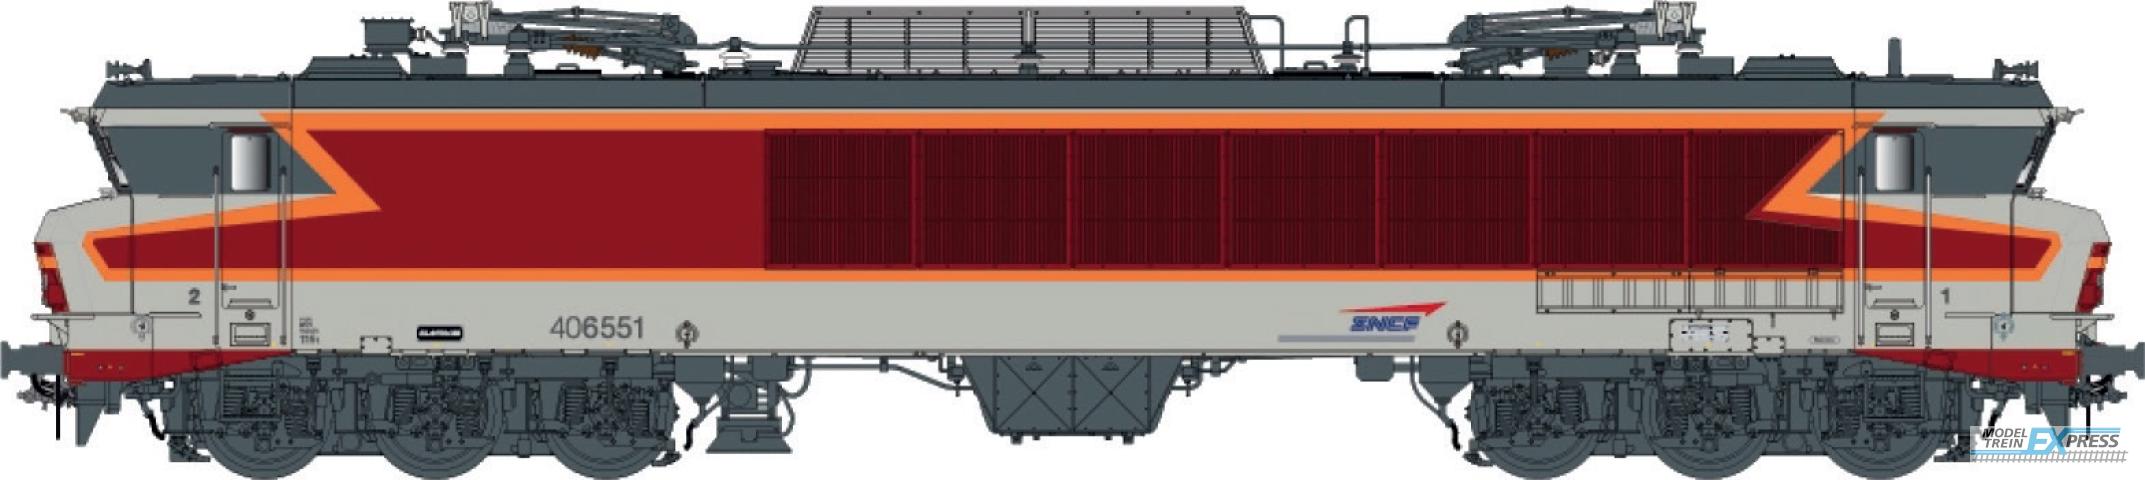 LS Models 10818S CC 6551, grey/red/orange, livery ARZENS, logo cap,Vénissieux depot  /  Ep. V  /  SNCF  /  HO  /  AC SOUND  /  1 P.